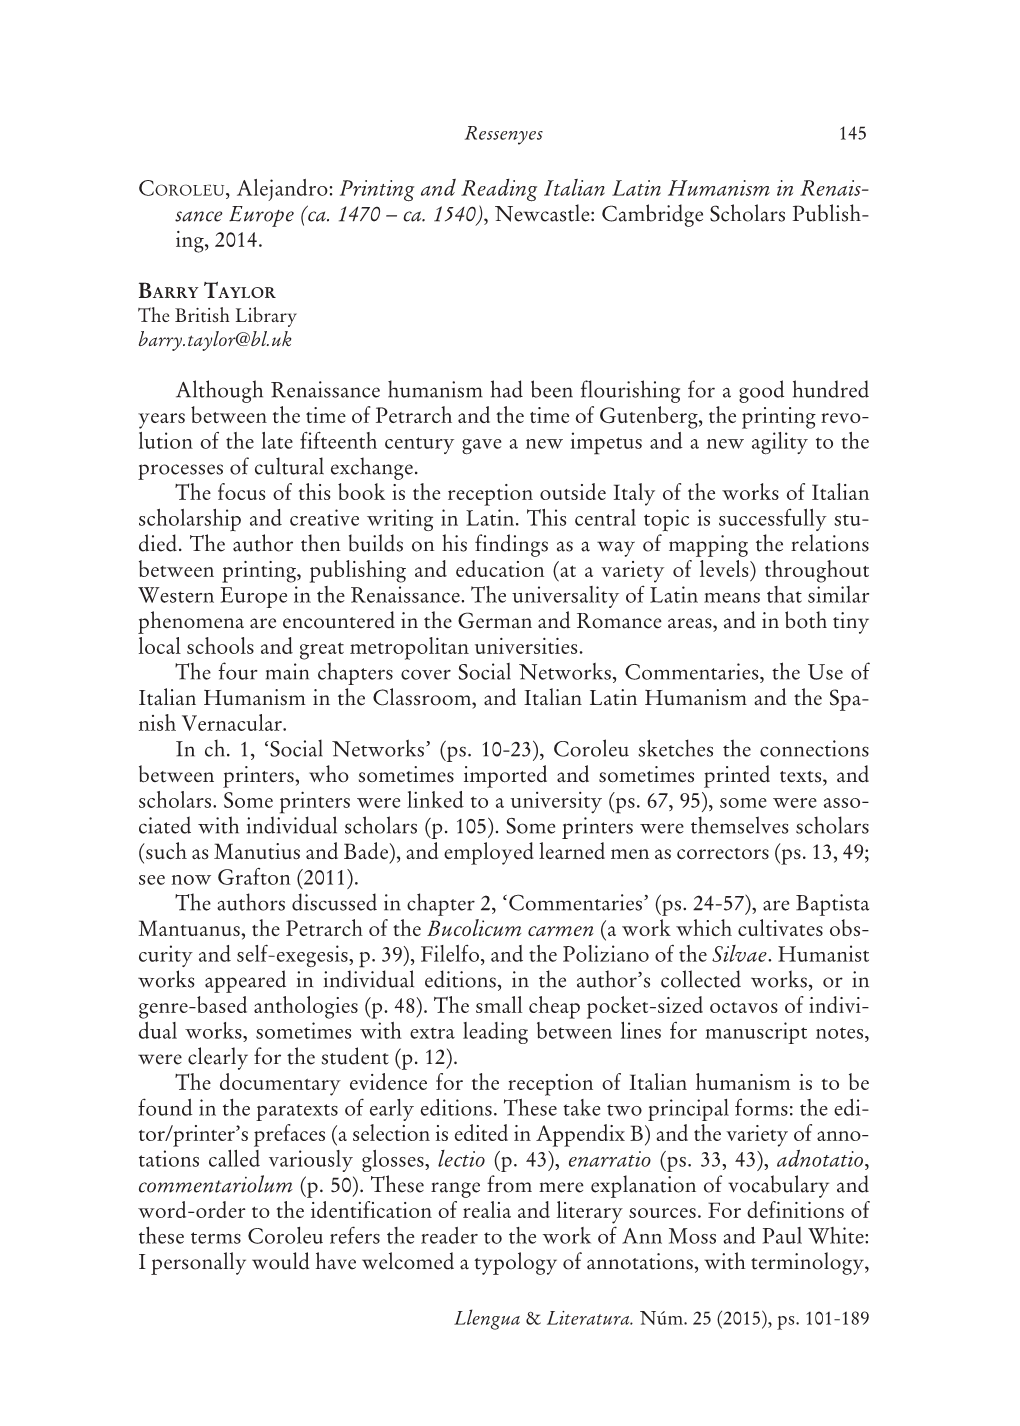 Coroleu, Alejandro: Printing and Reading Italian Latin Humanism in Renais- Sance Europe (Ca